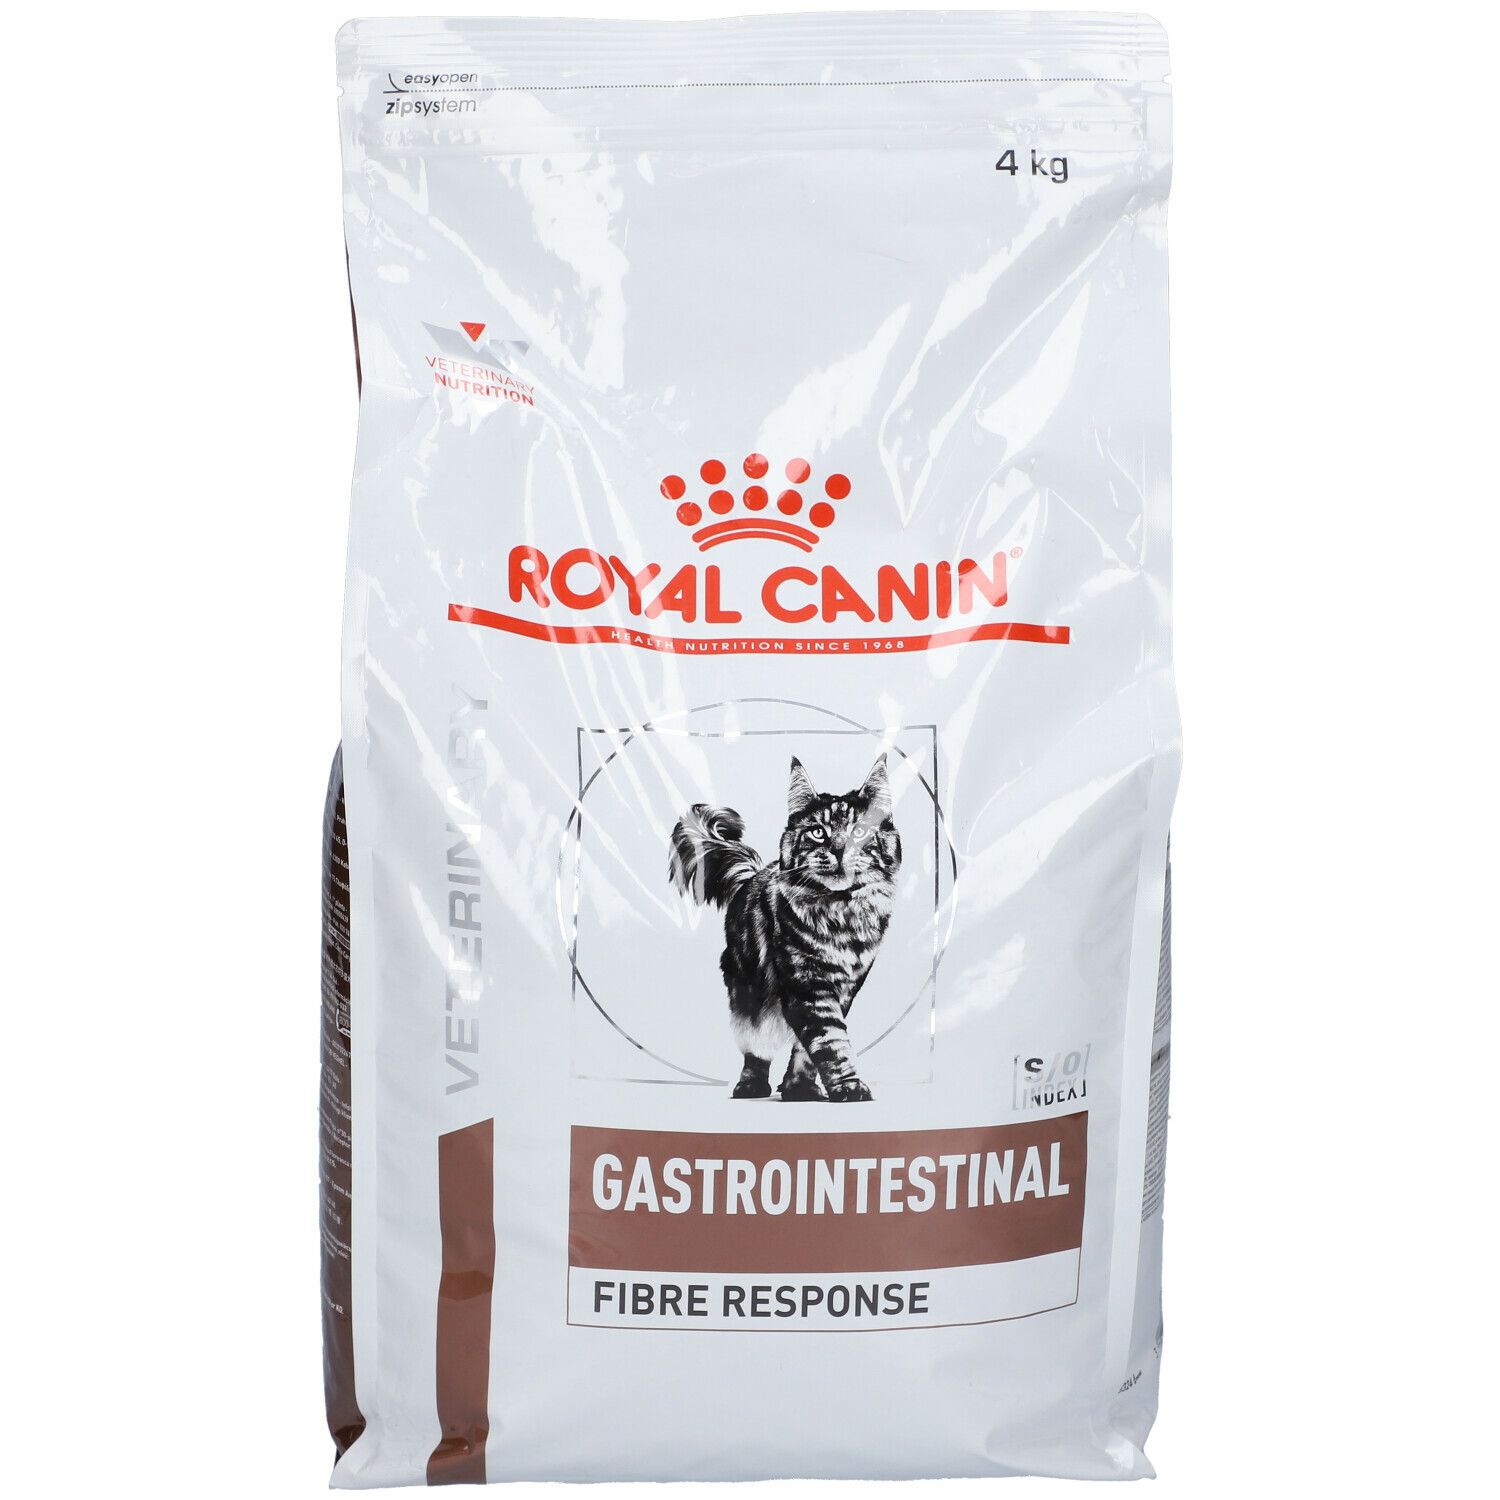 ROYAL CANIN Veterinary Gastrointestinal Fibre Response